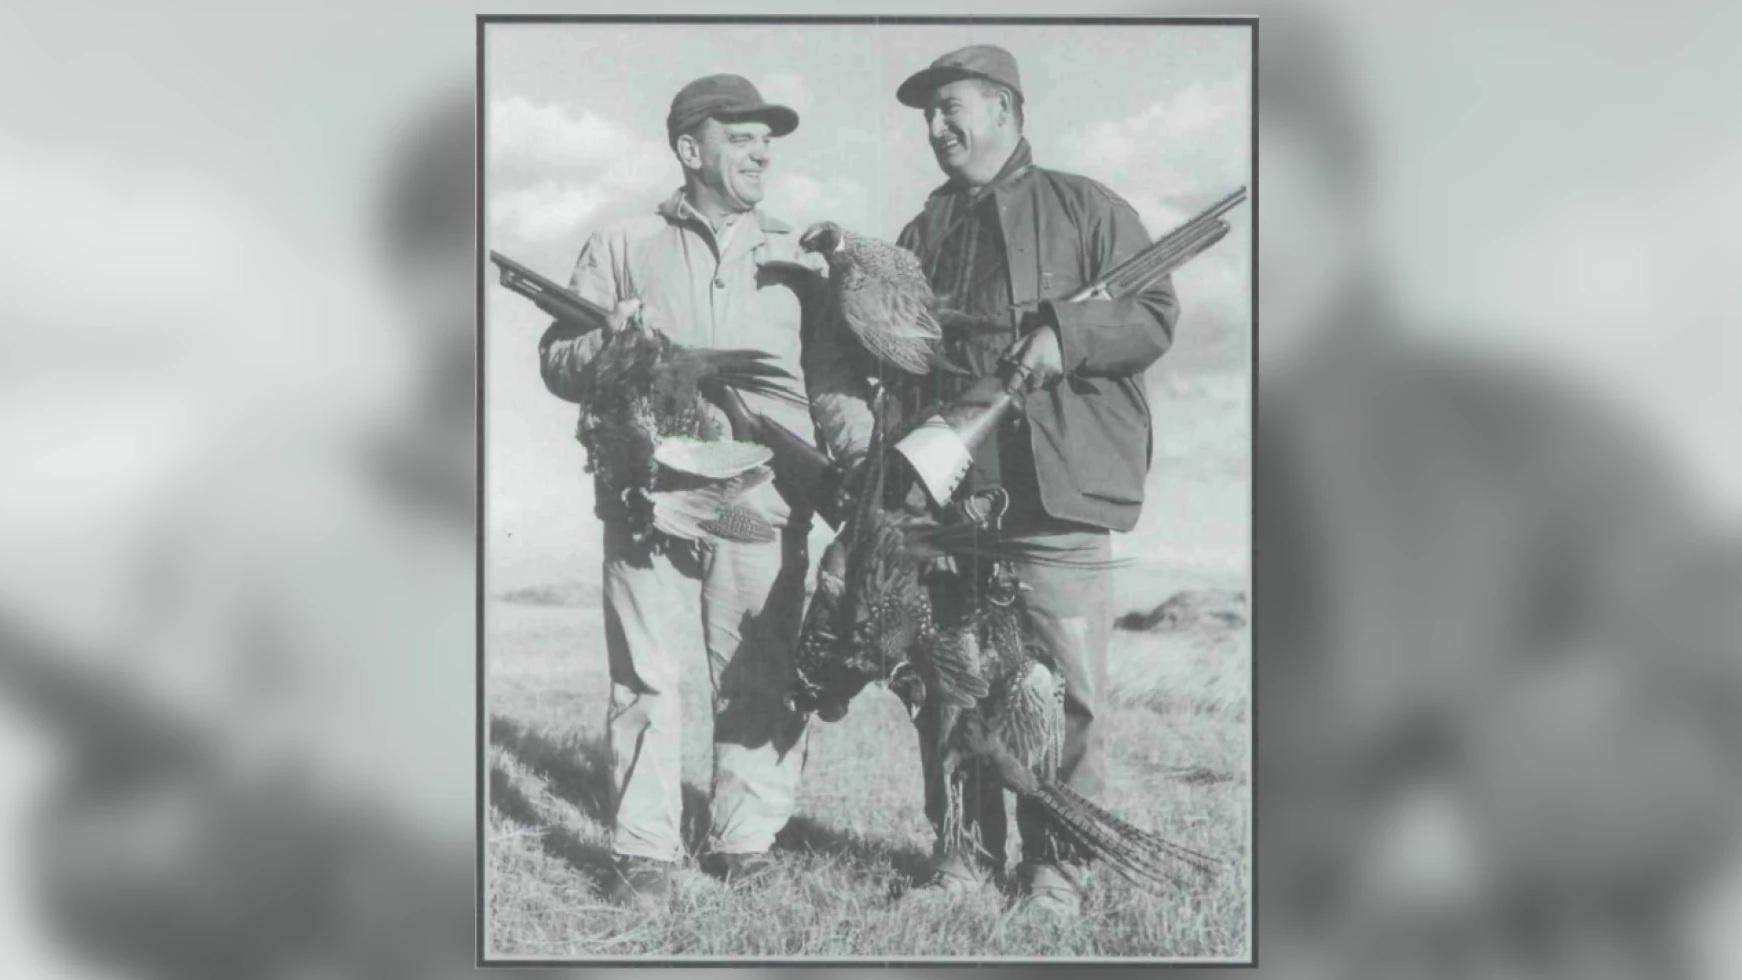 Two hunters each holding a shotgun and pheasants. 